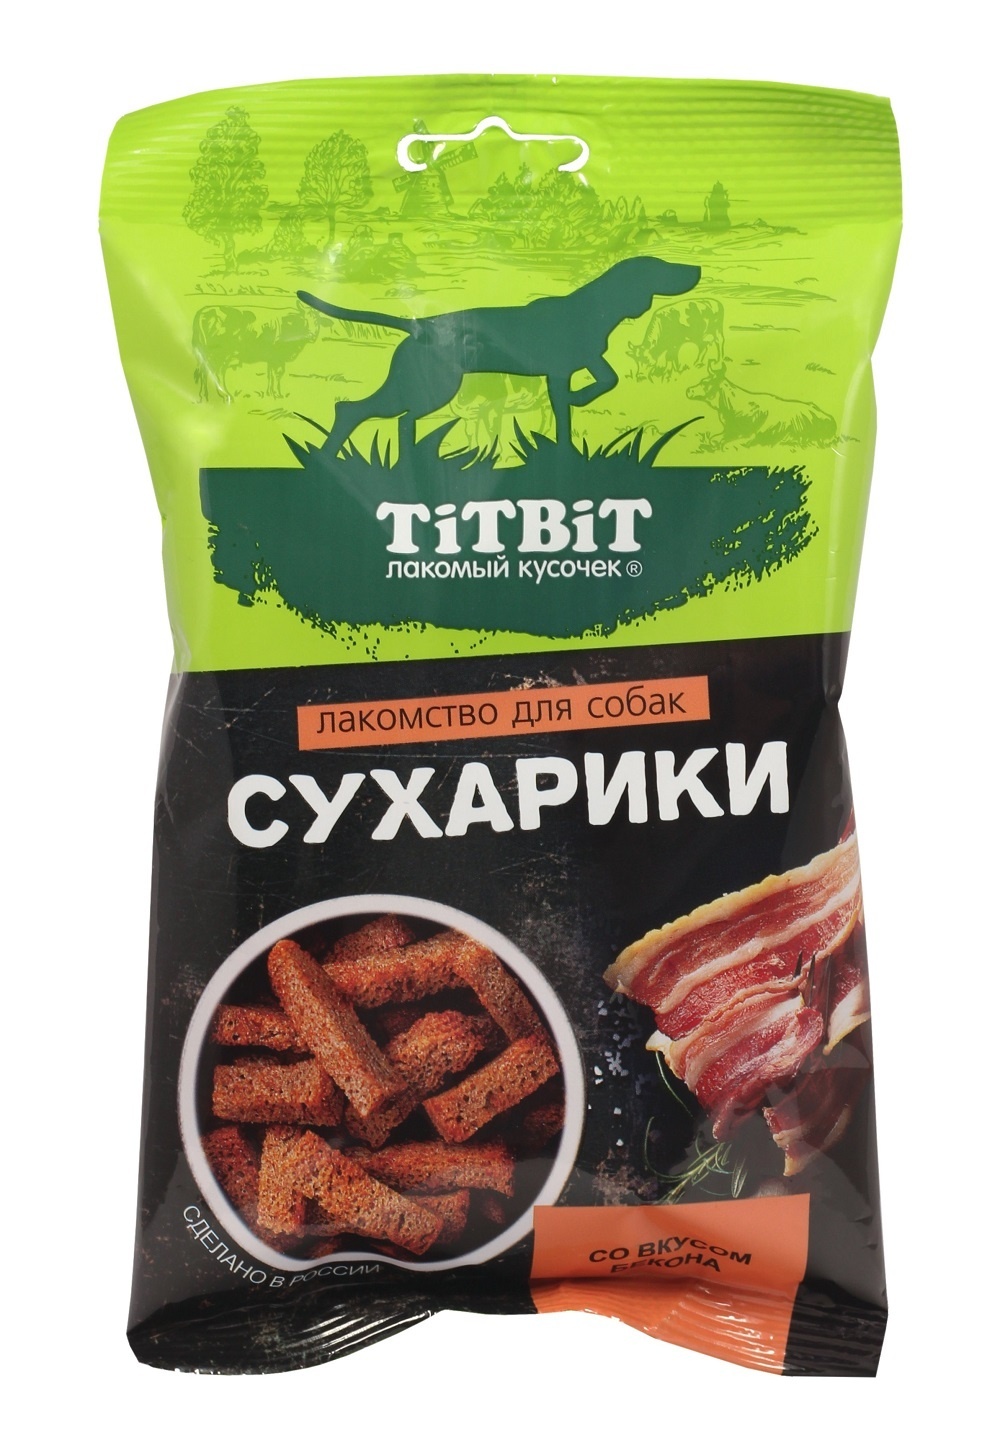 TiTBiT TiTBiT сухарики со вкусом бекона, лакомство для собак (55 г)